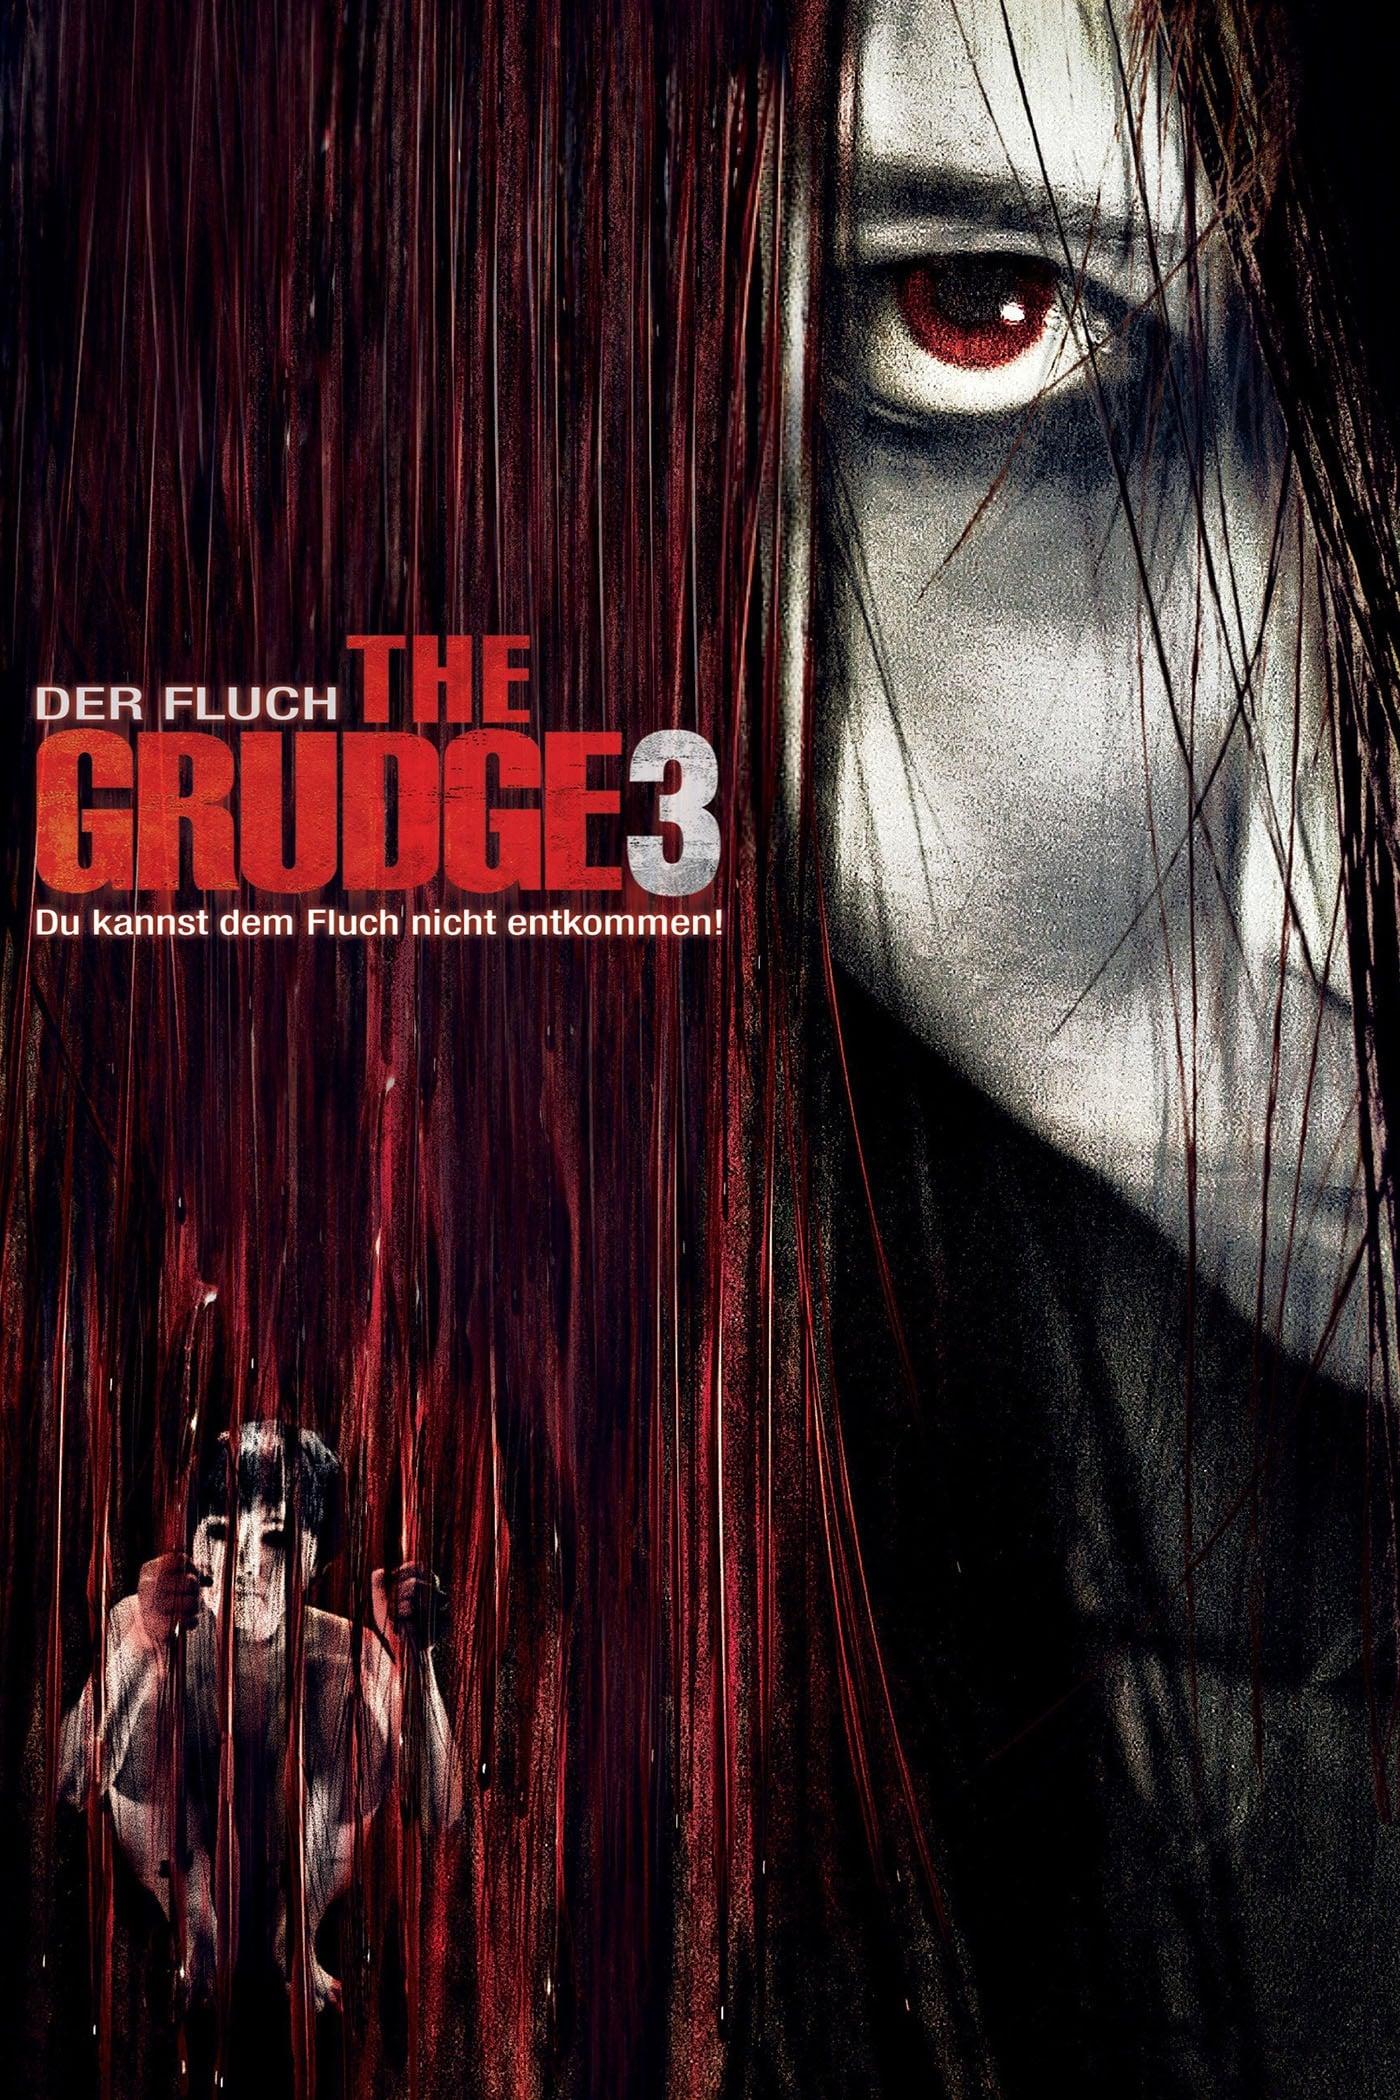 Der Fluch - The Grudge 3 poster